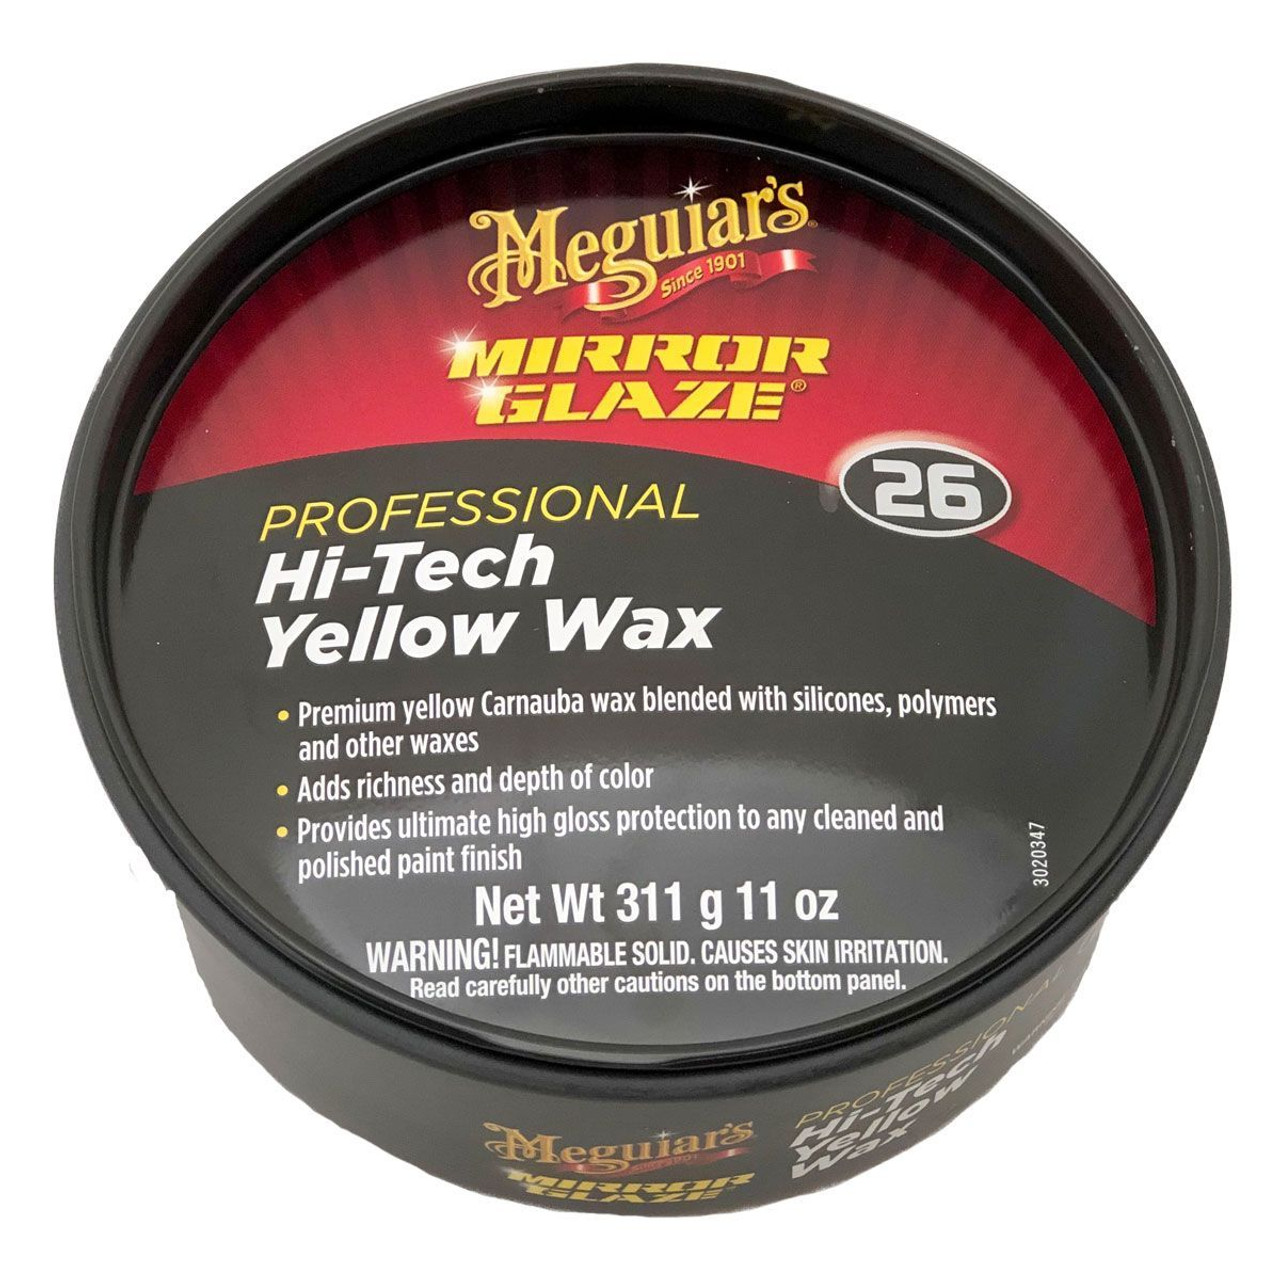 ⋙ Meguiars wax kopen?